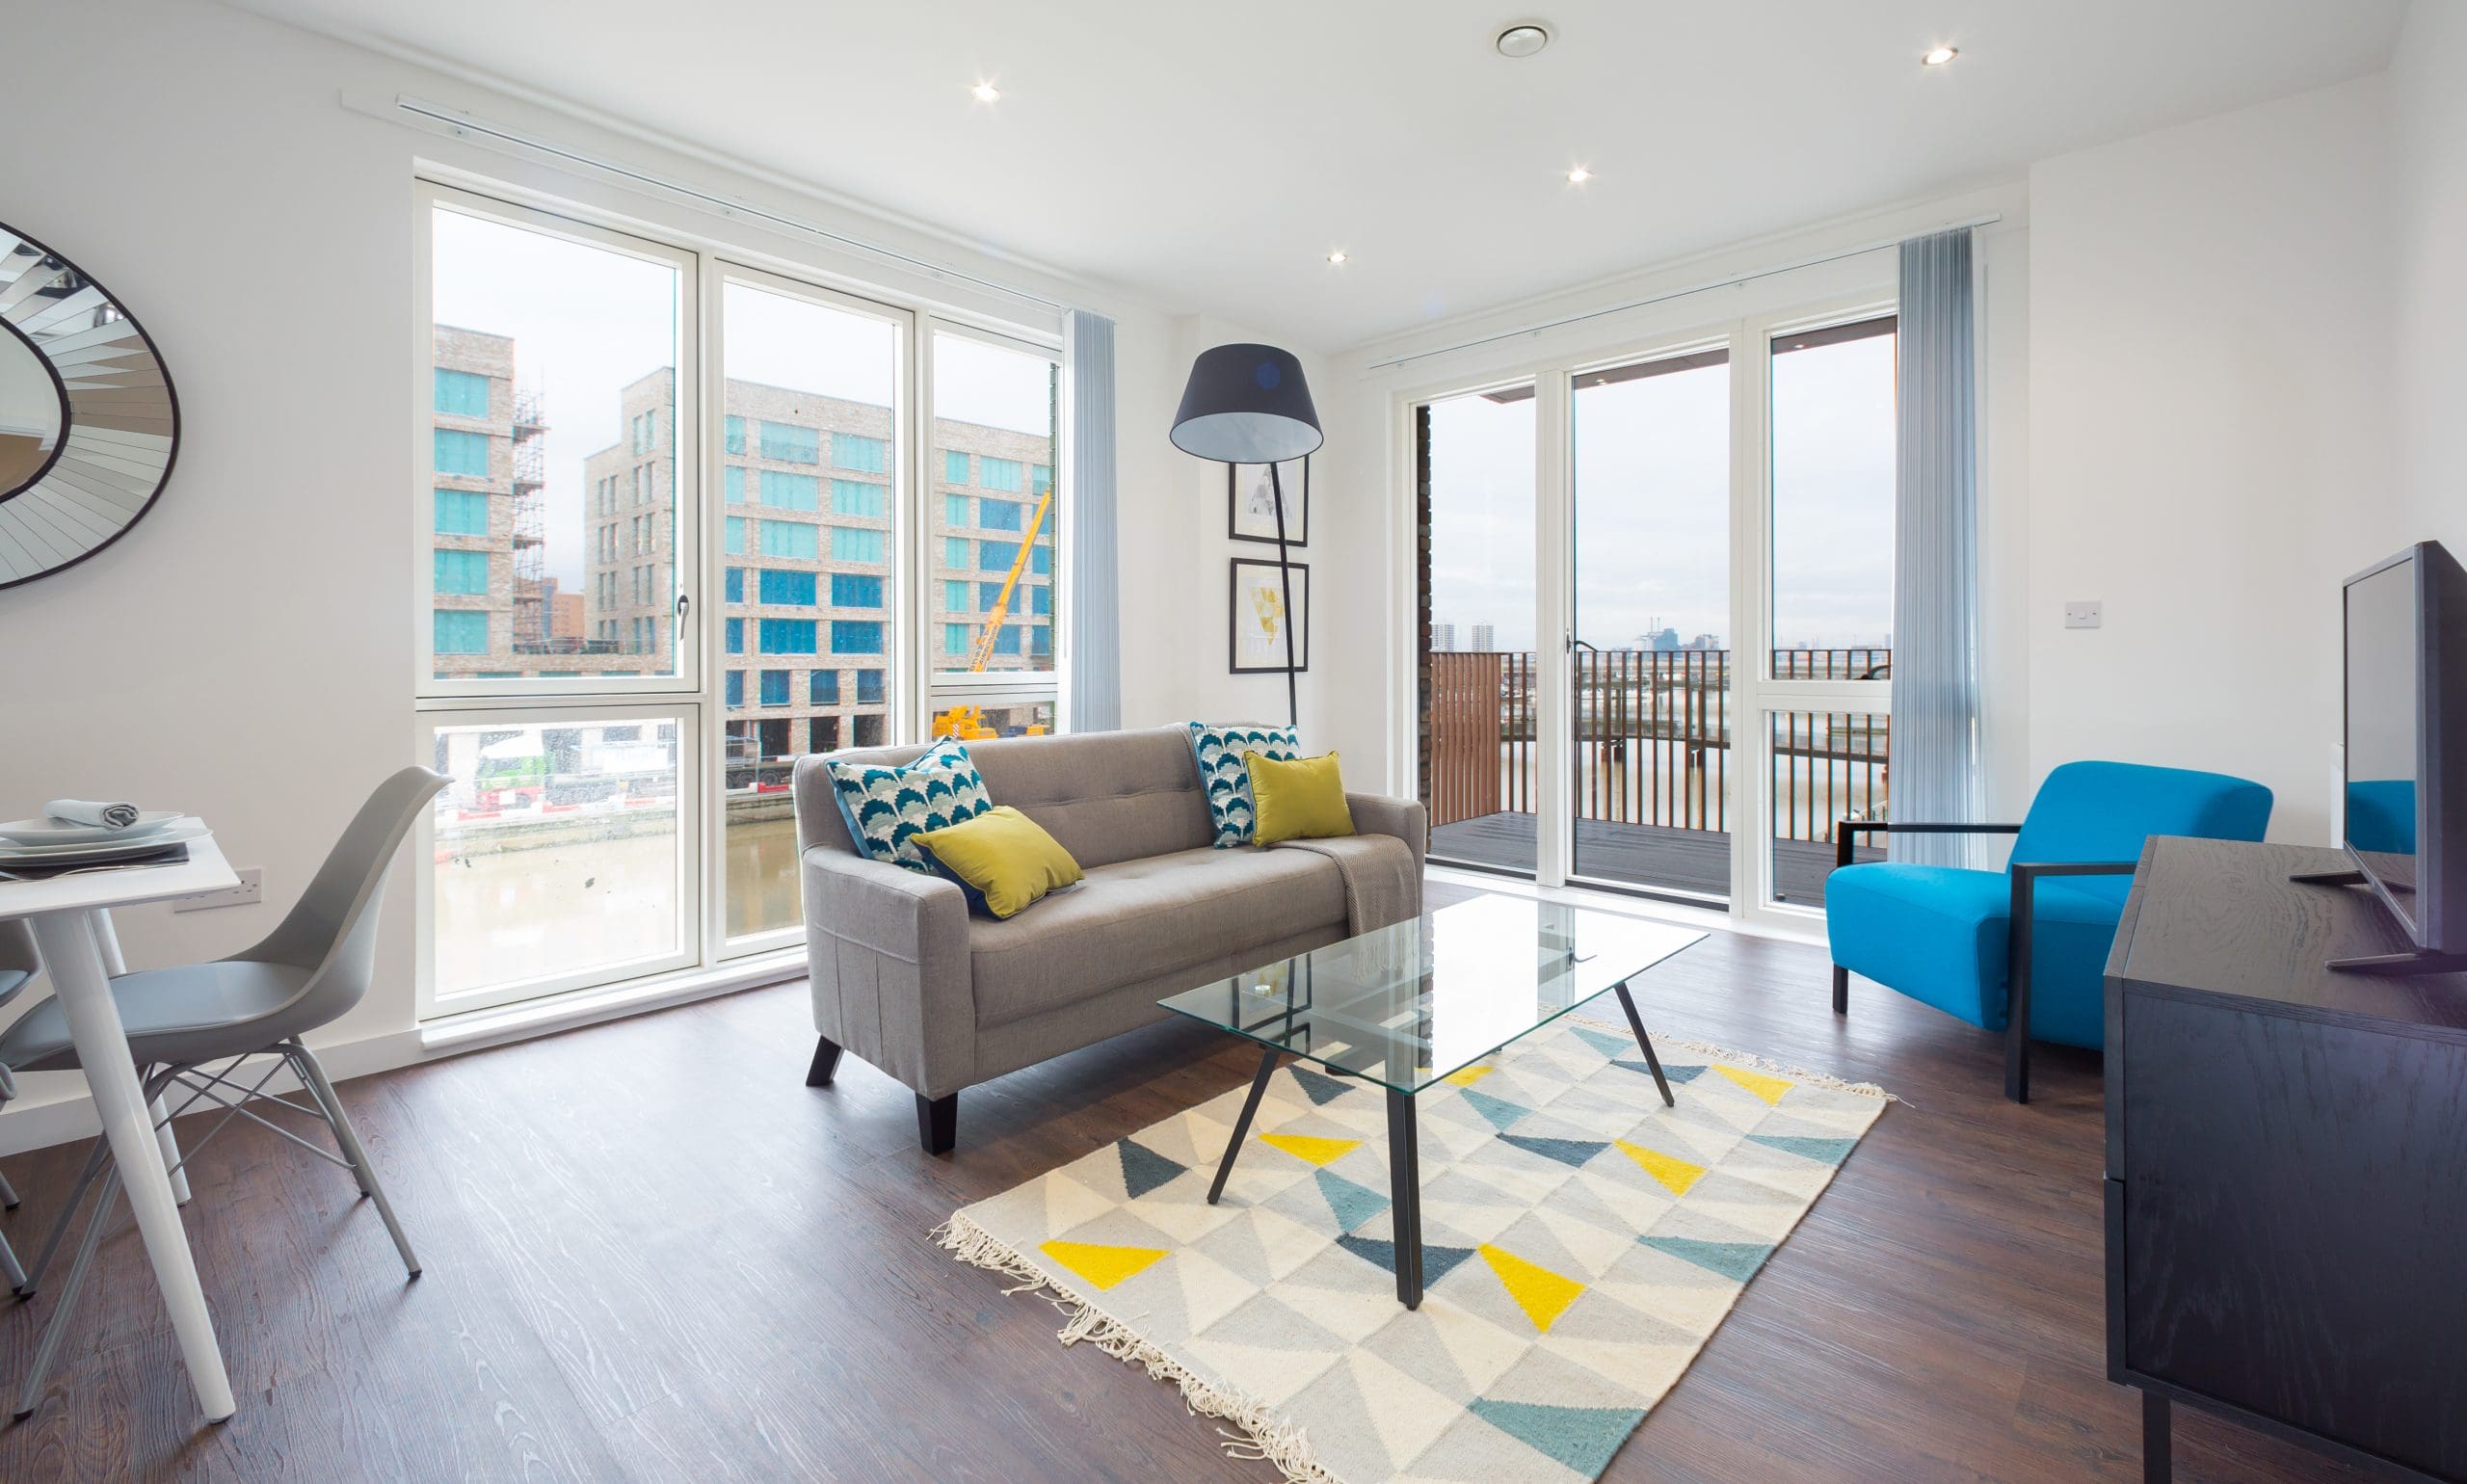 Living room and balcony at Royal Albert wharf development.